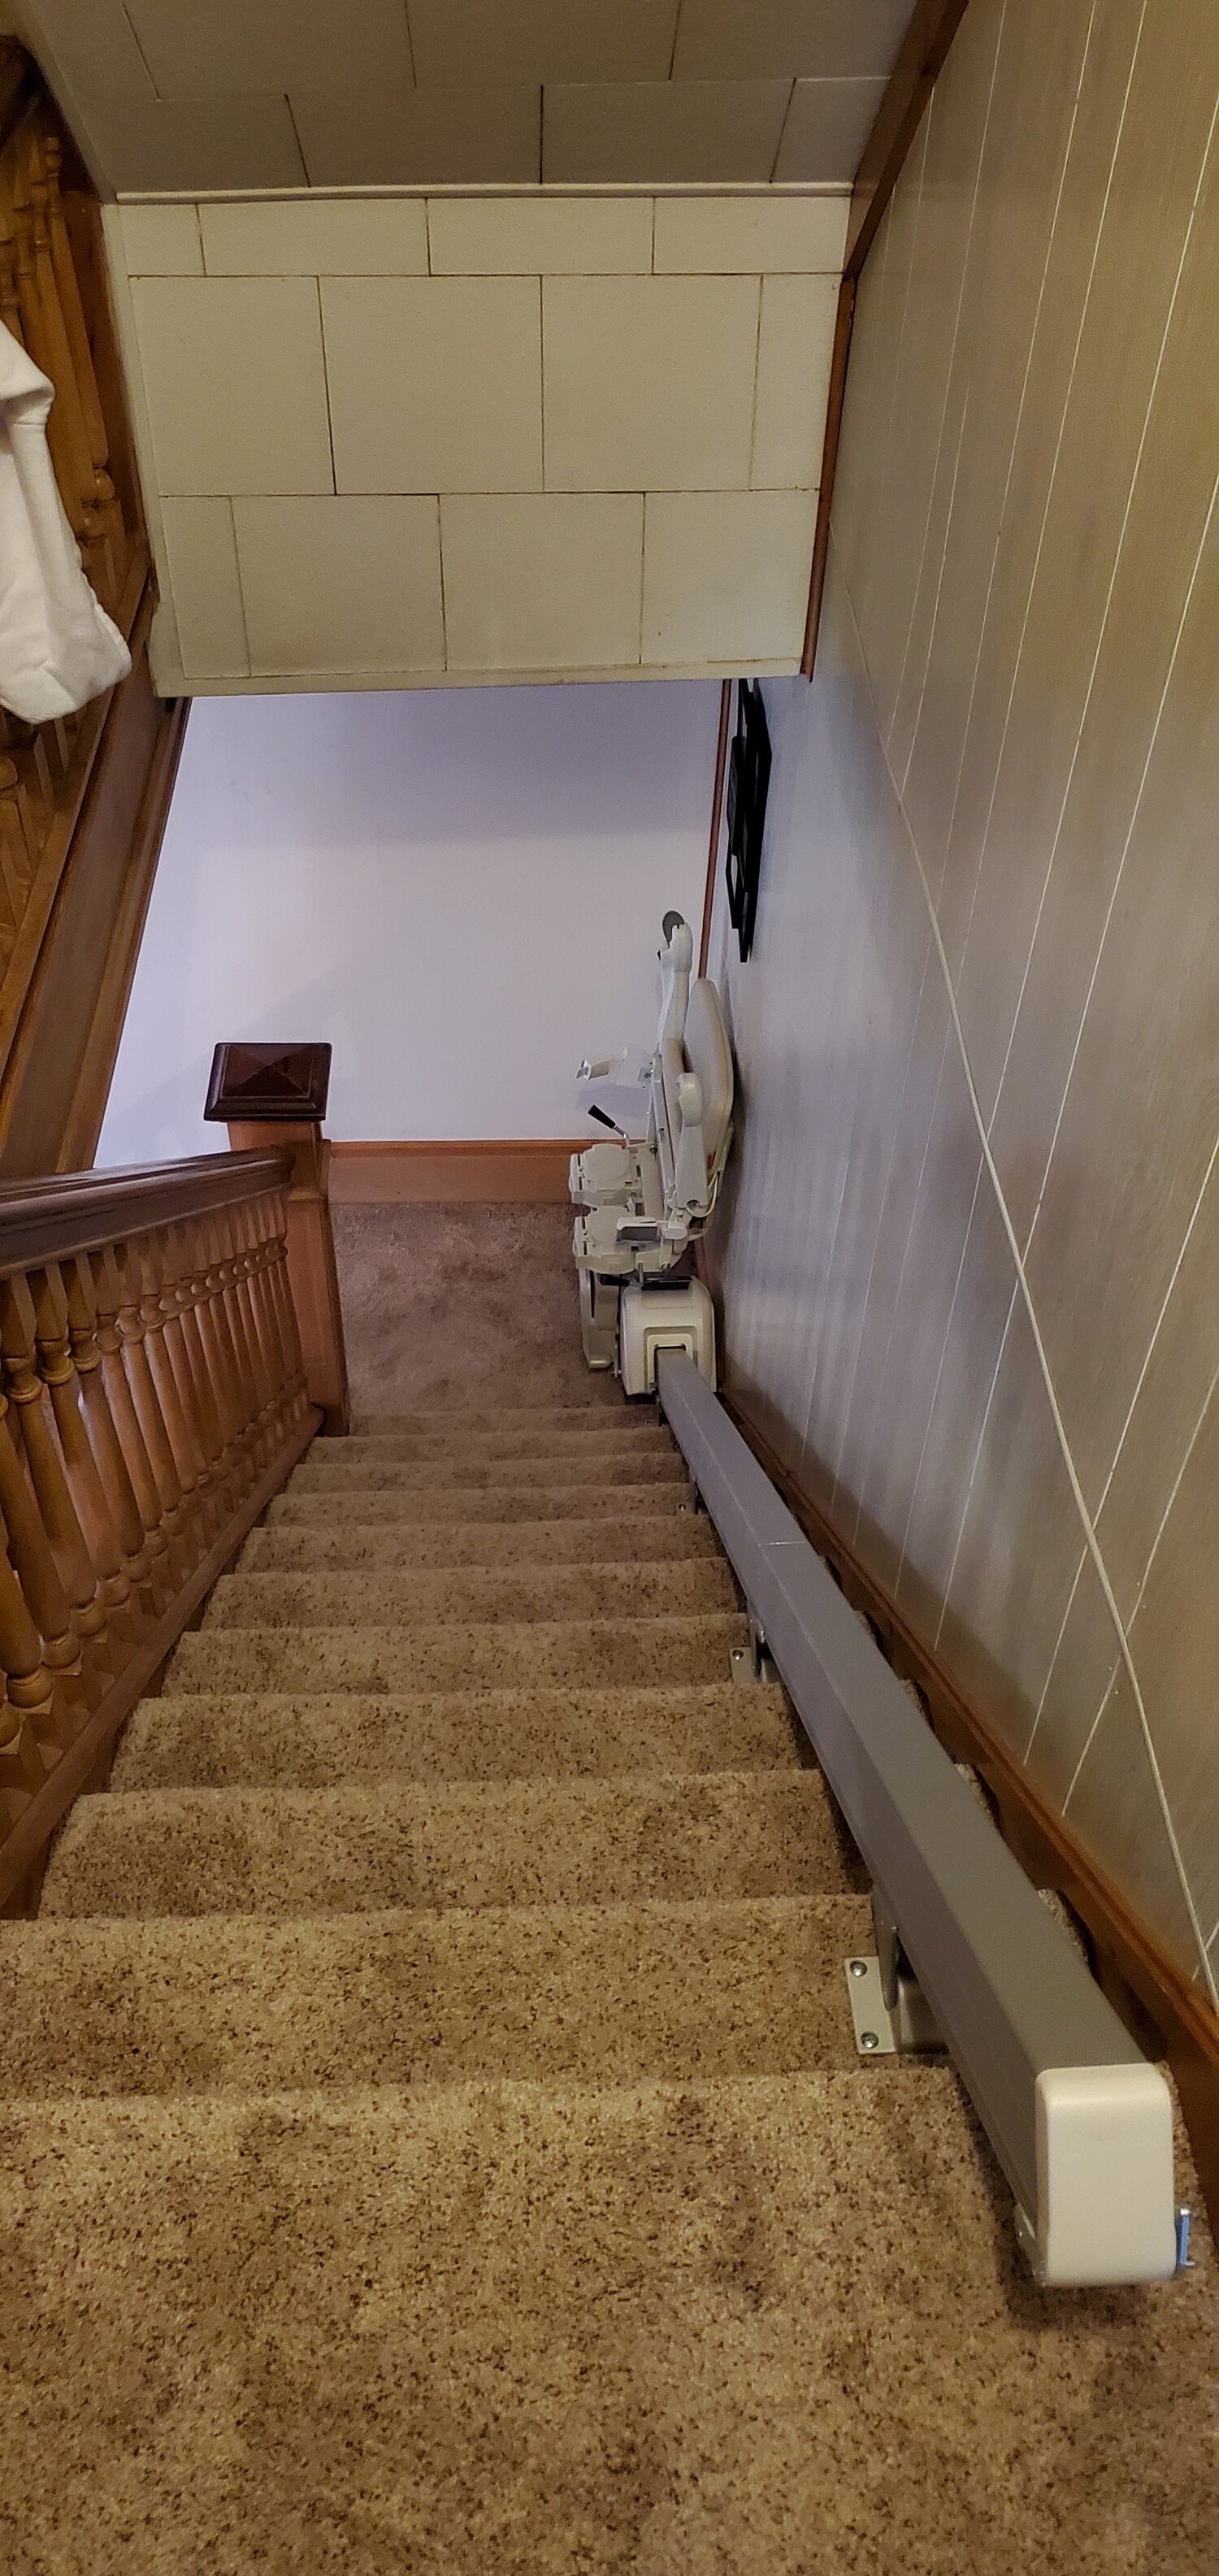 Stairlift Installation